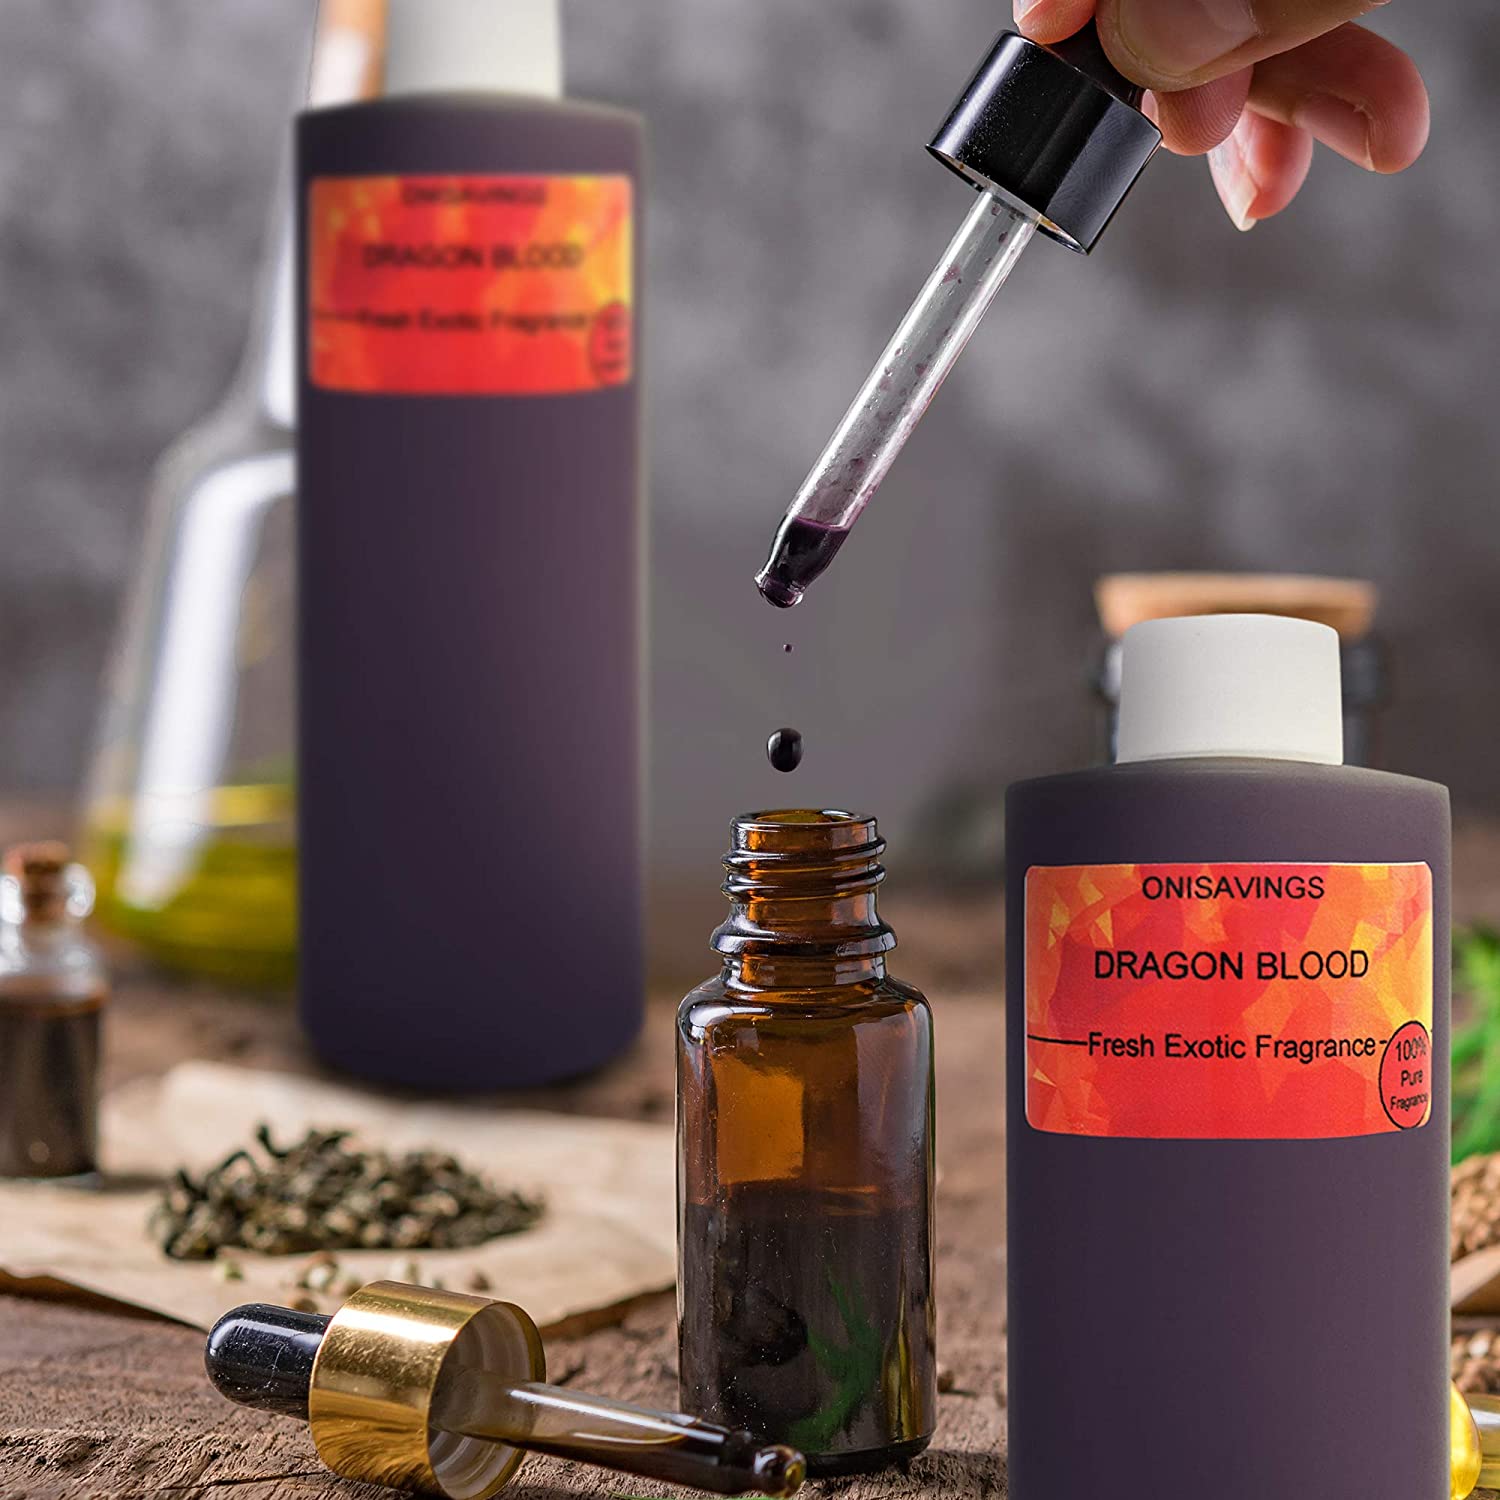 Dragons Blood Premium Fragrance Oil - Scented Oils - 30ml 